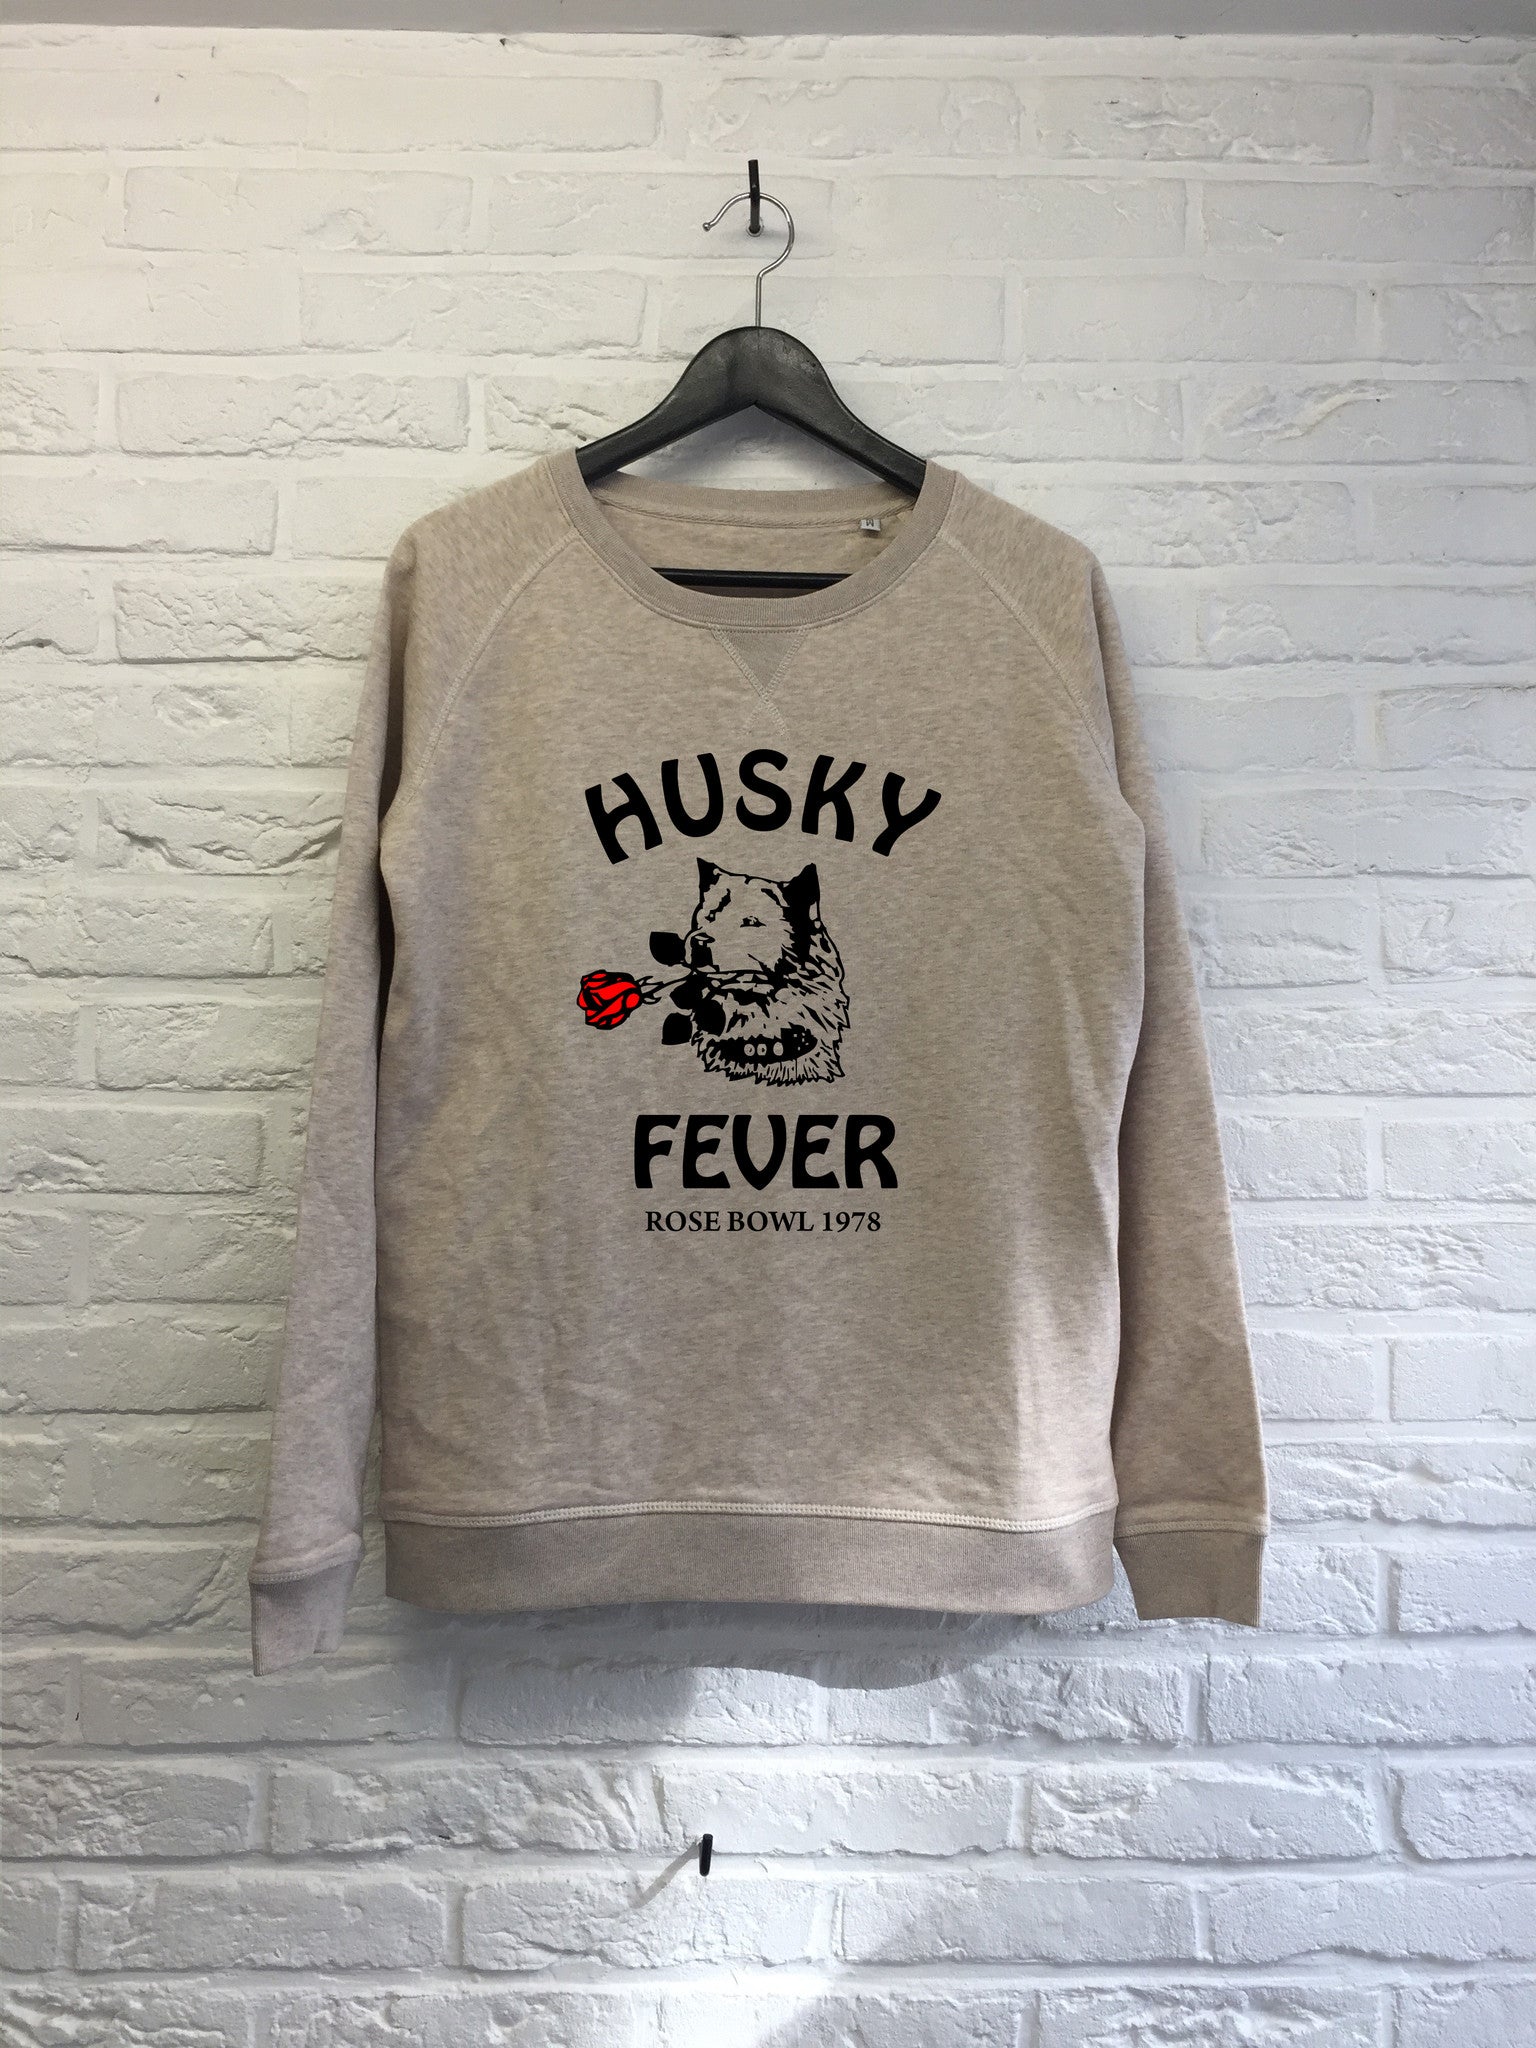 Husky fever - Sweat - Femme-Sweat shirts-Atelier Amelot